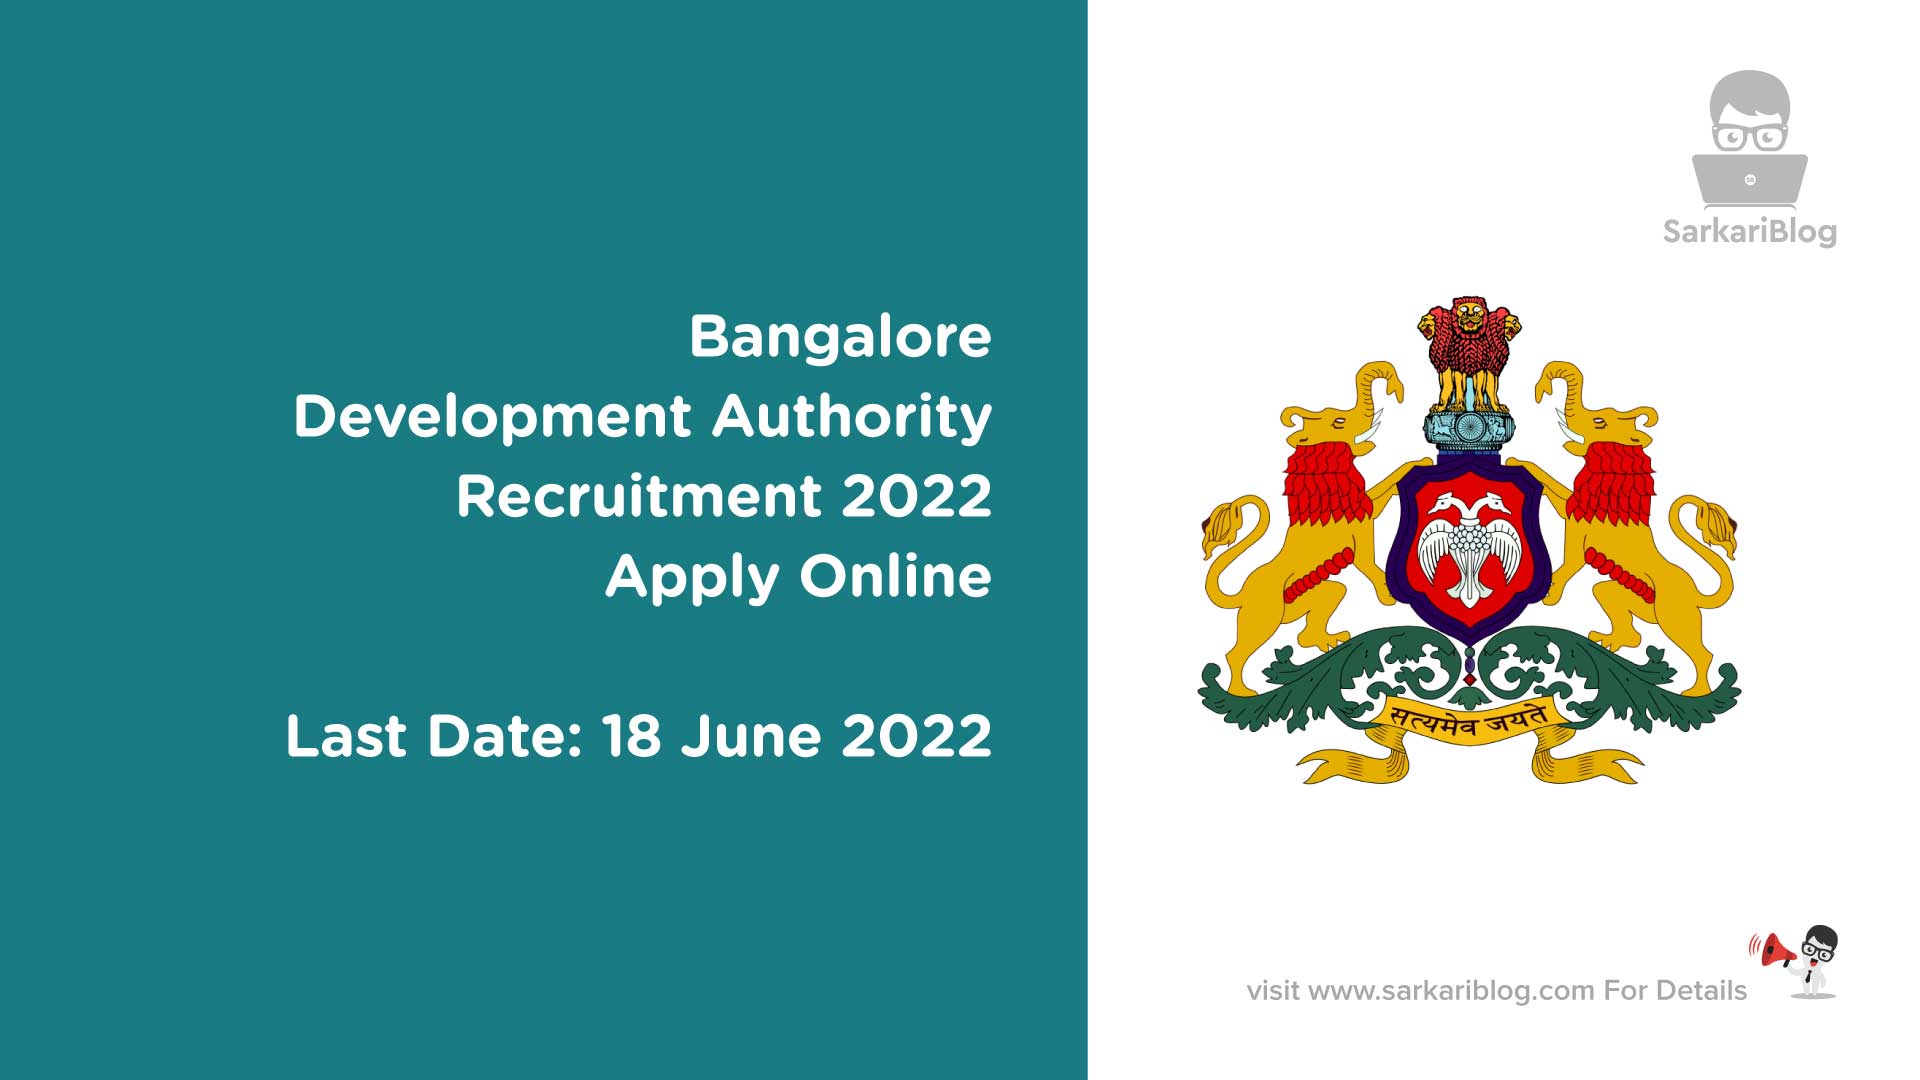 Bangalore Development Authority Recruitment 2022